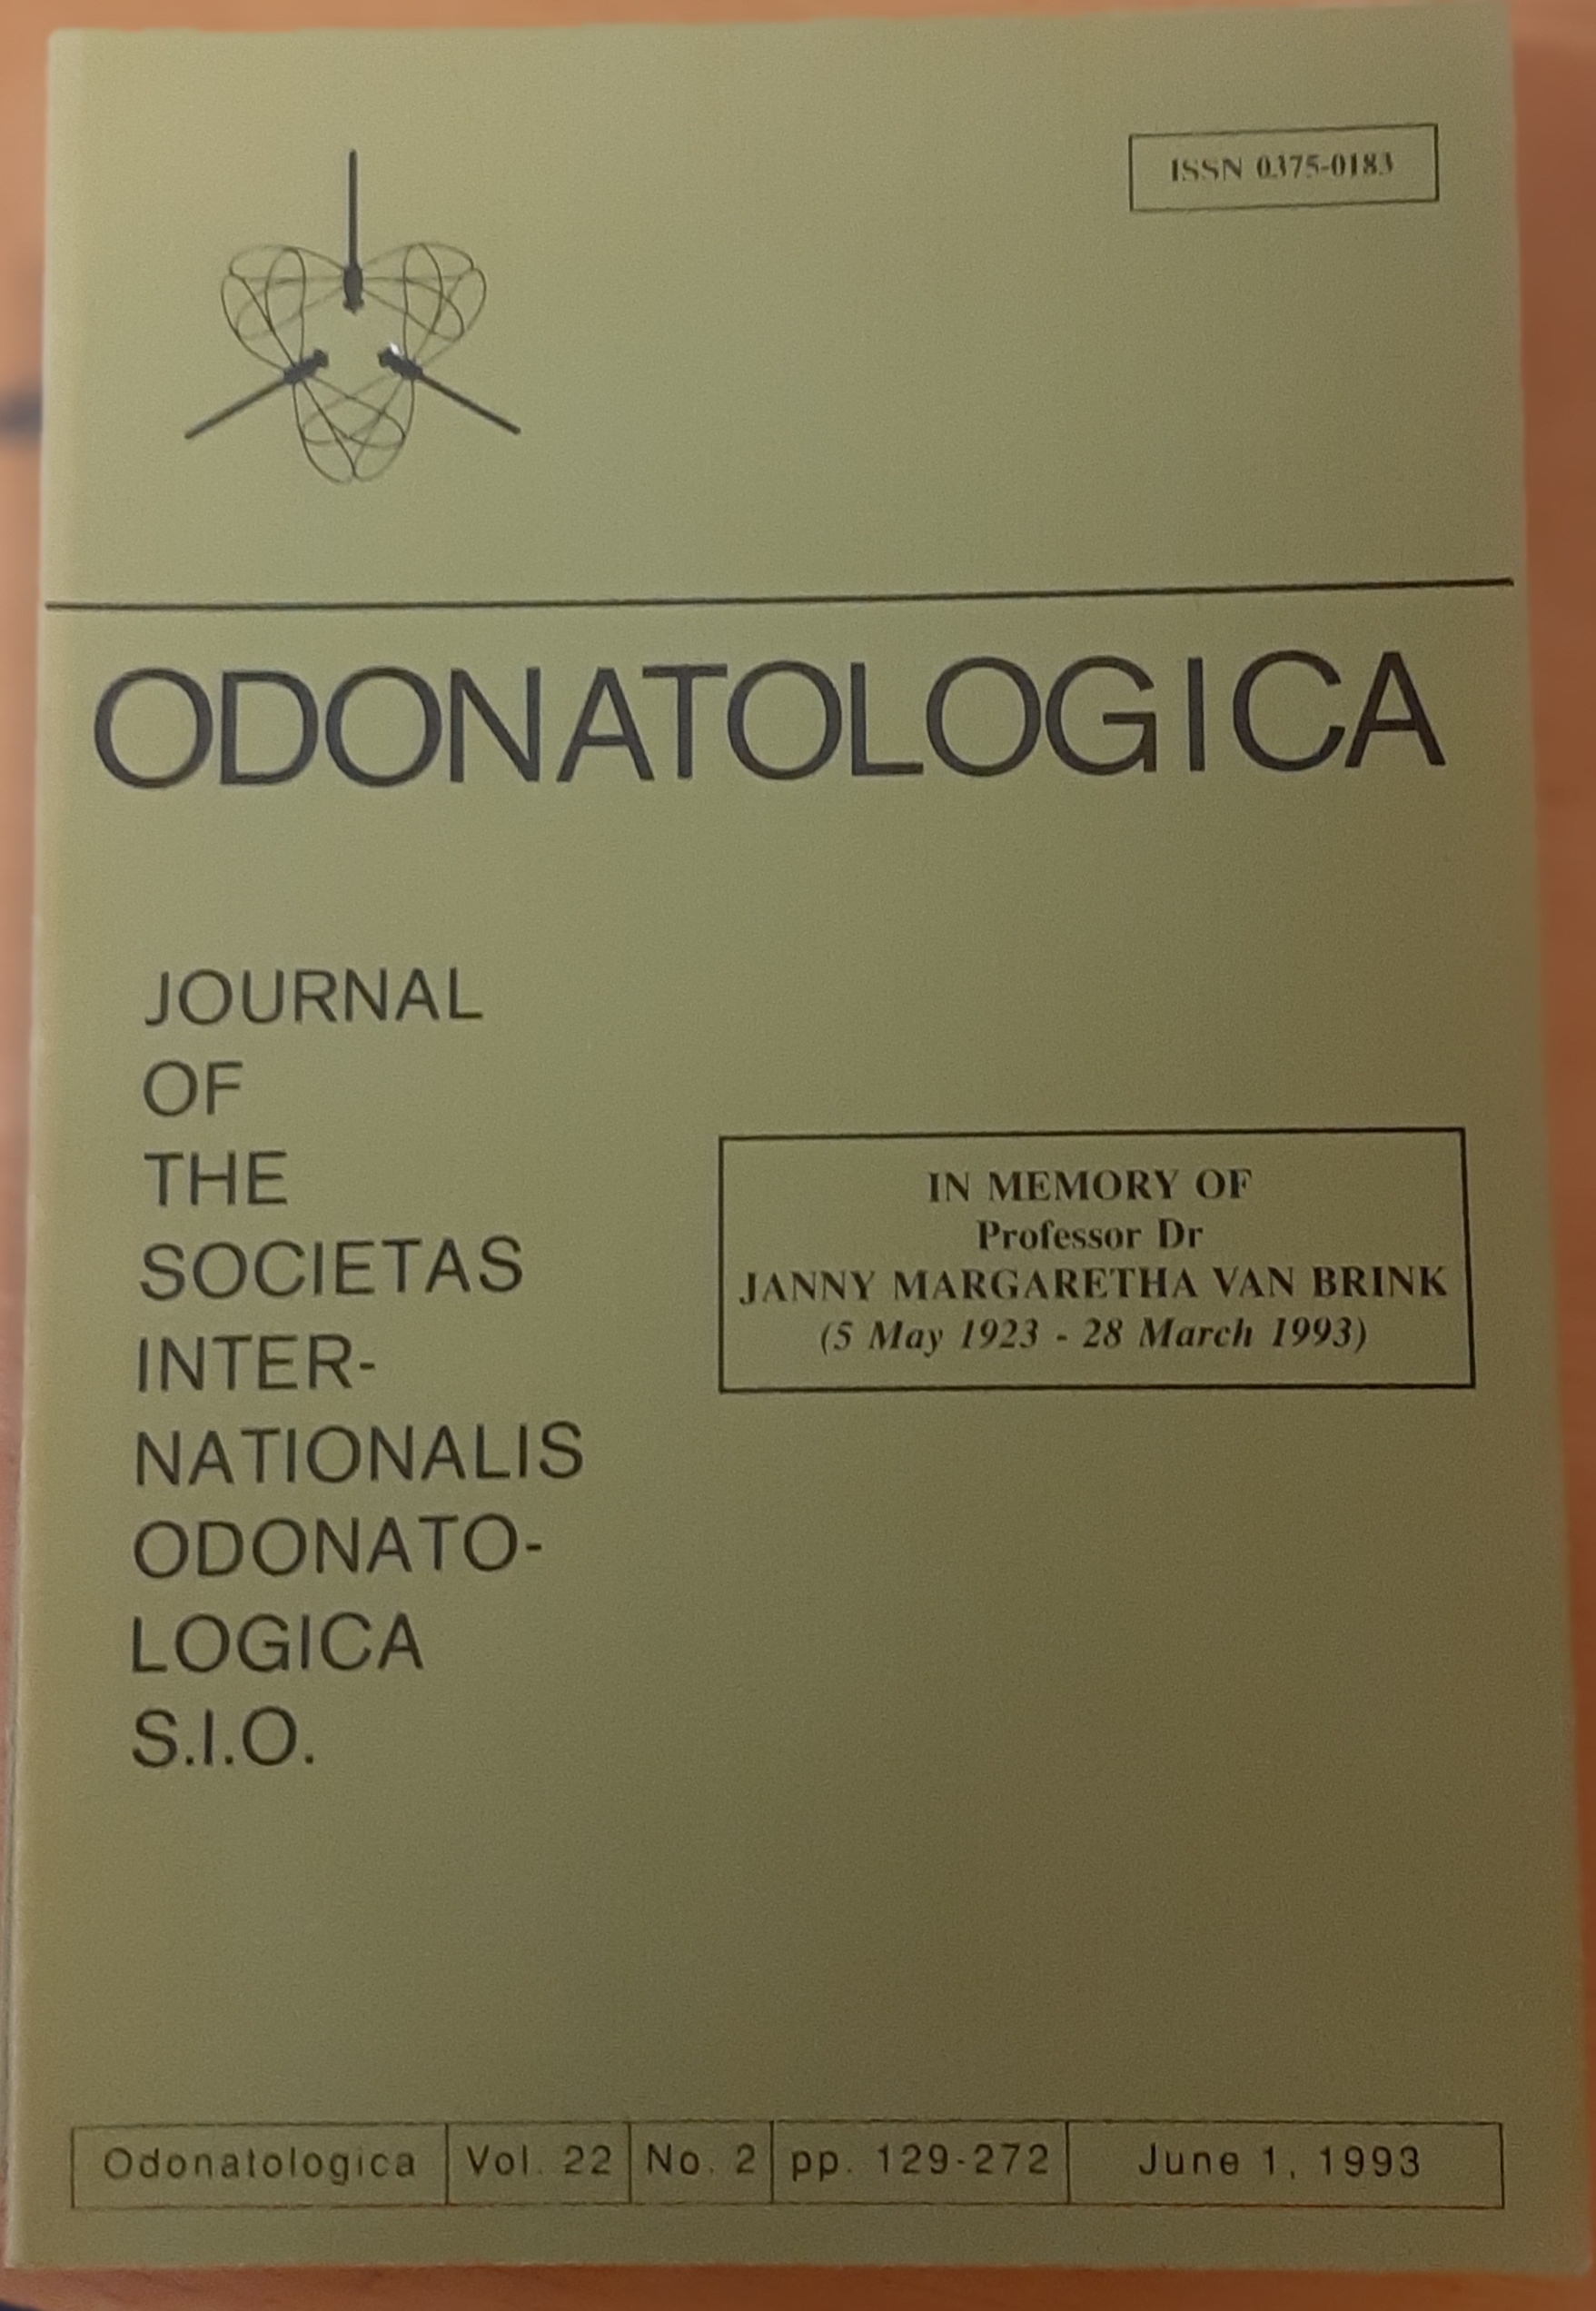 Odonatologica 1993/22. évf. 2. szám Journal of the Societas Internationalis Odonatologica S.I.O. (Rippl-Rónai Múzeum RR-F)